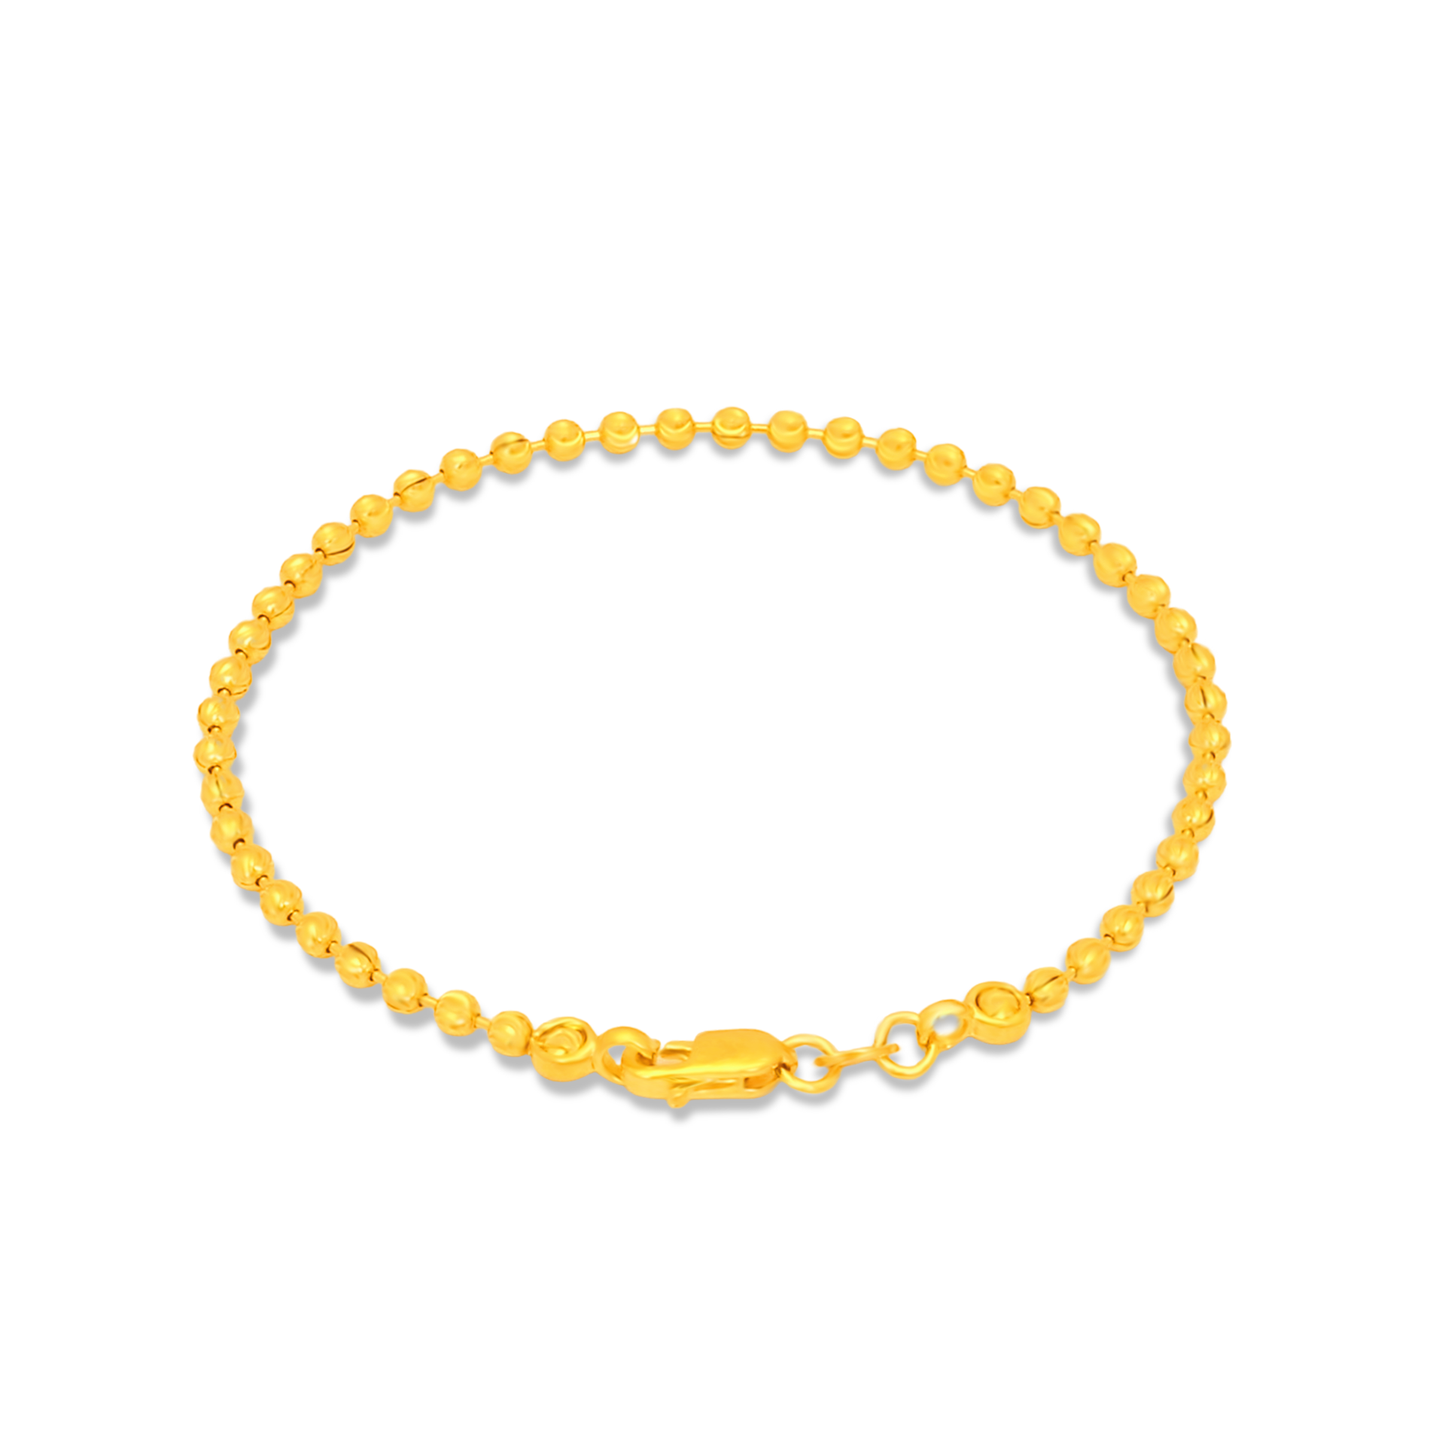 TAKA Jewellery 916 Gold Bracelet Gold Ball